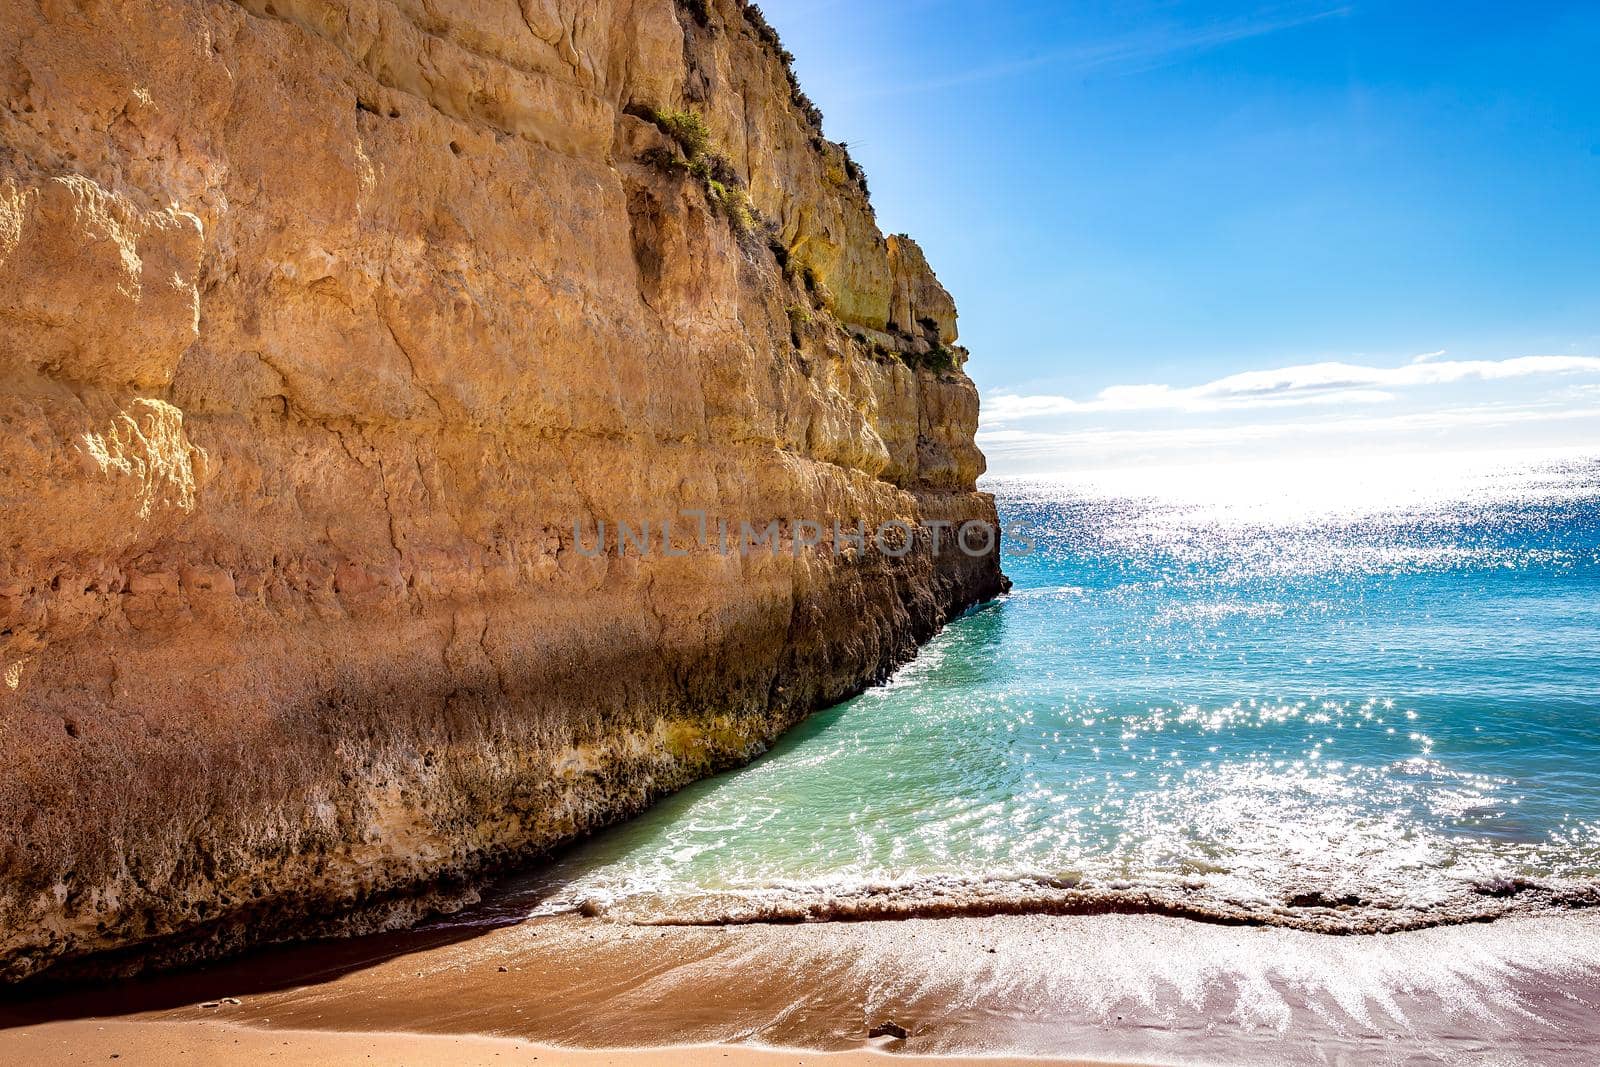 Beach and cliffs of Senhora da rocha, in Lagoa, Algarve, Portugal